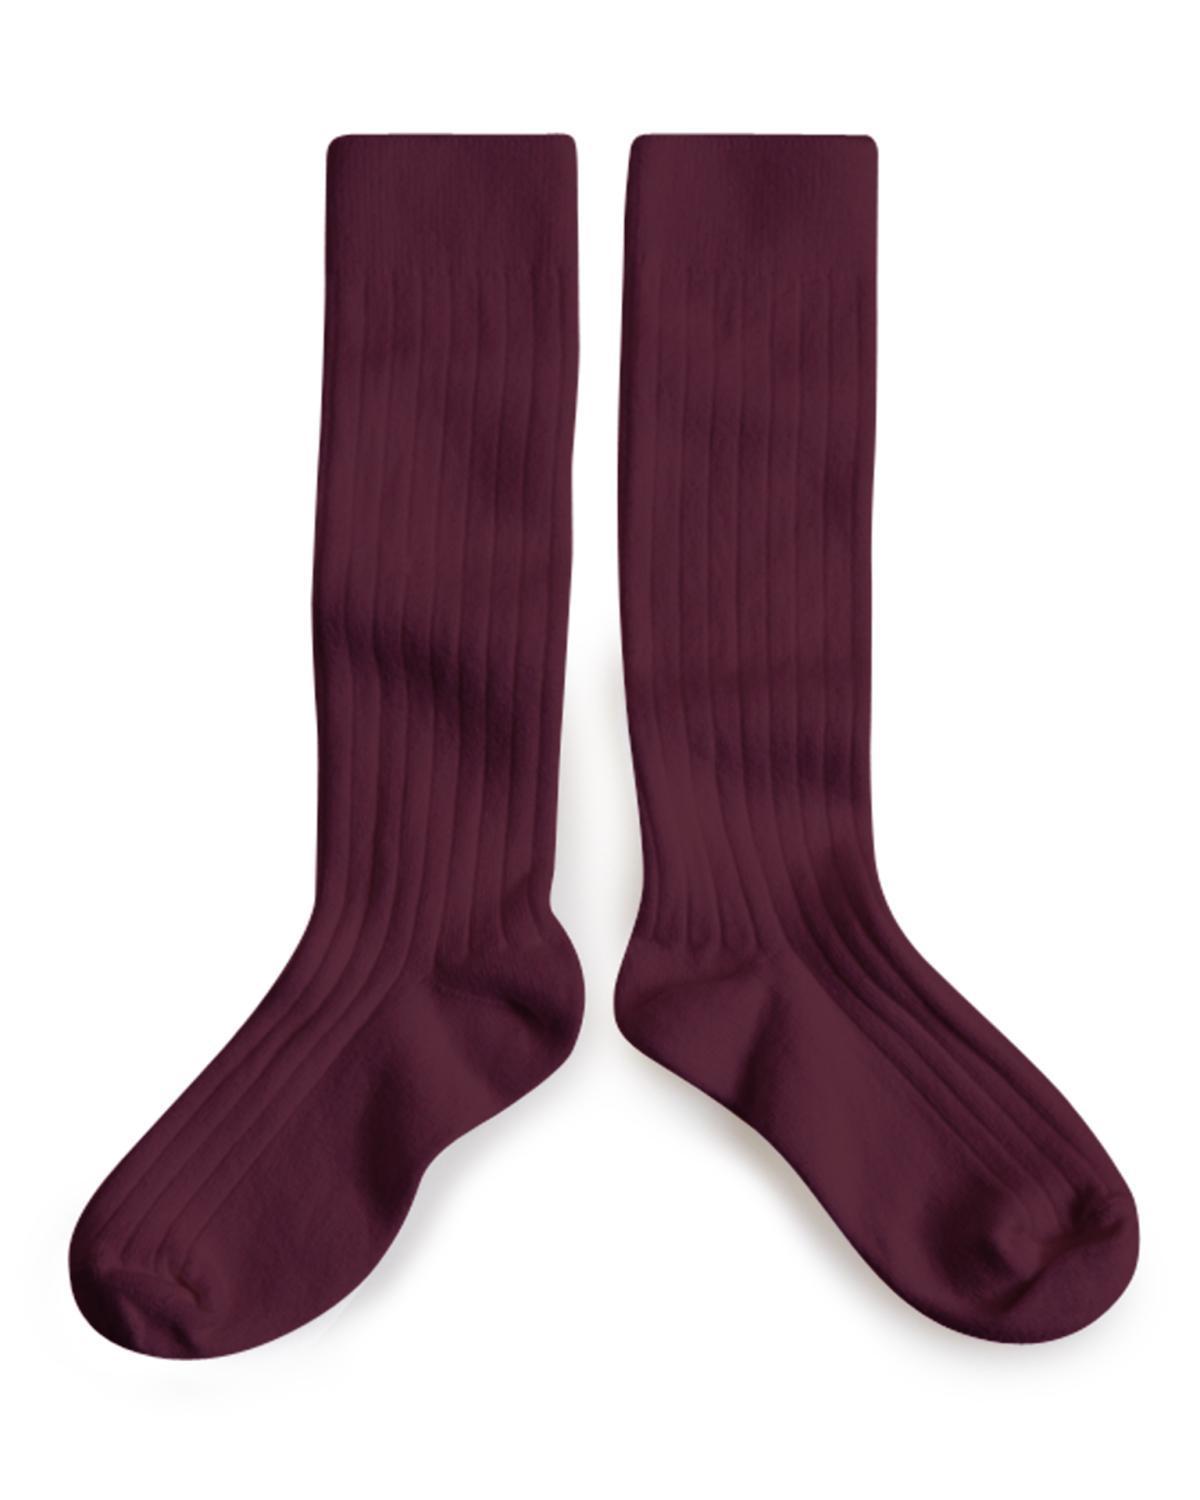 Little collegien accessories 18/20 ribbed knee high socks in aubergine